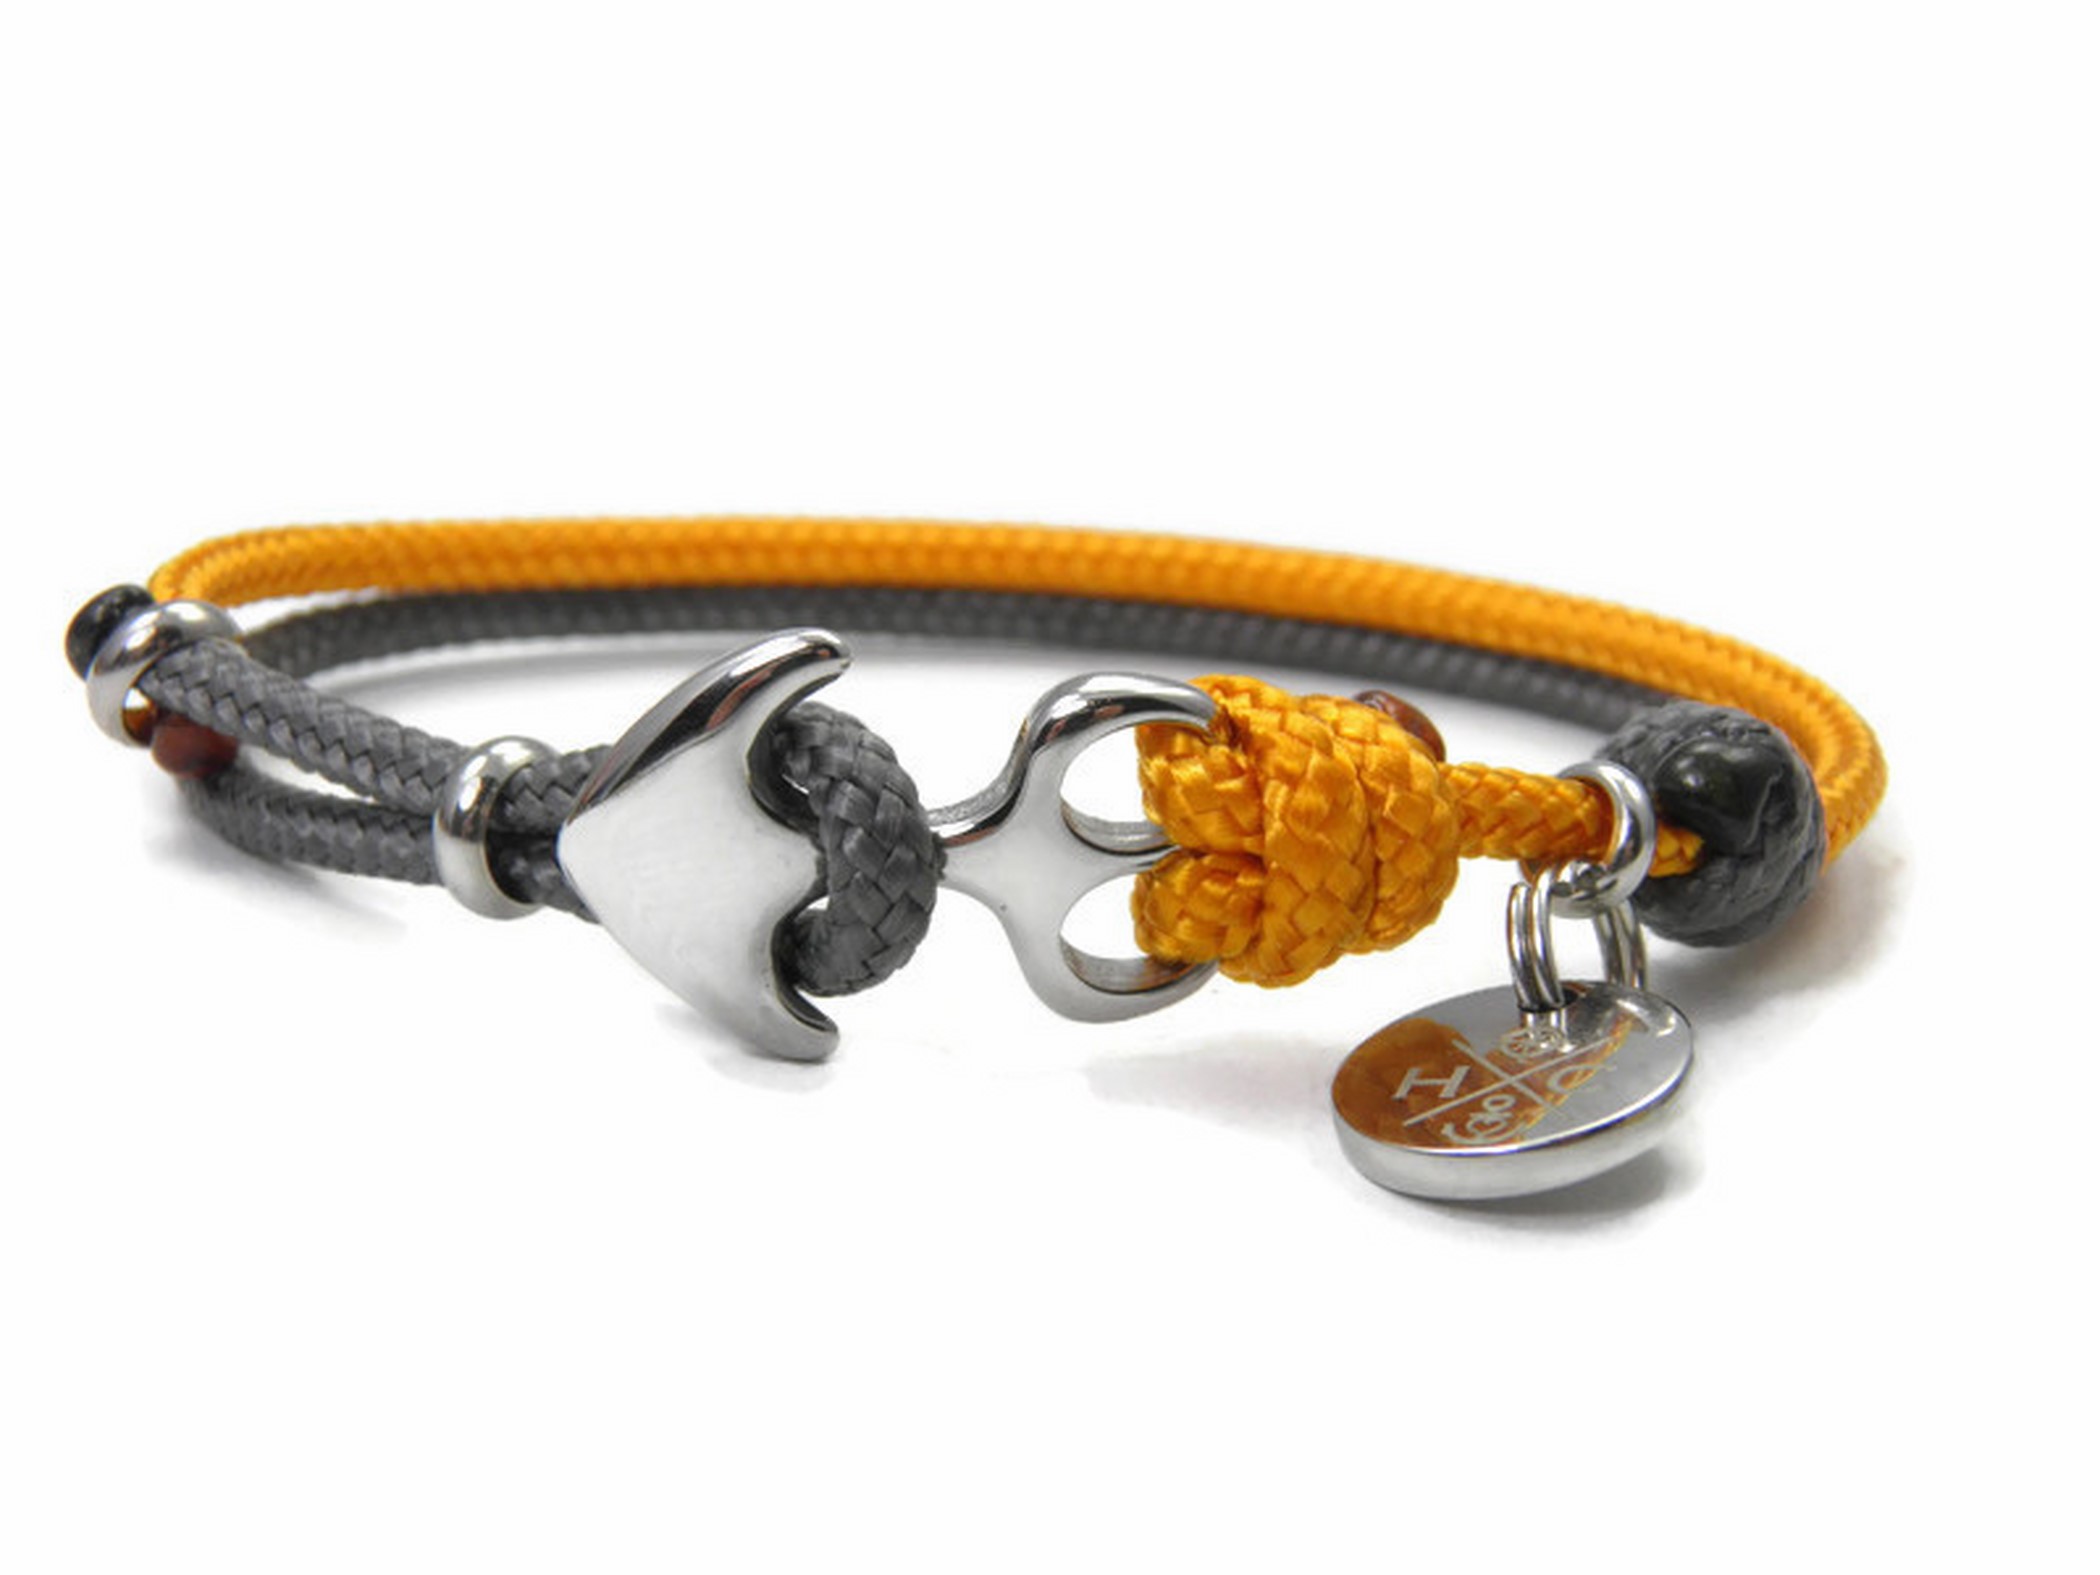 Anker Armband-Surfer Armband-verstellbar-Edelstahl Anker-Paracord Wickelarmband 